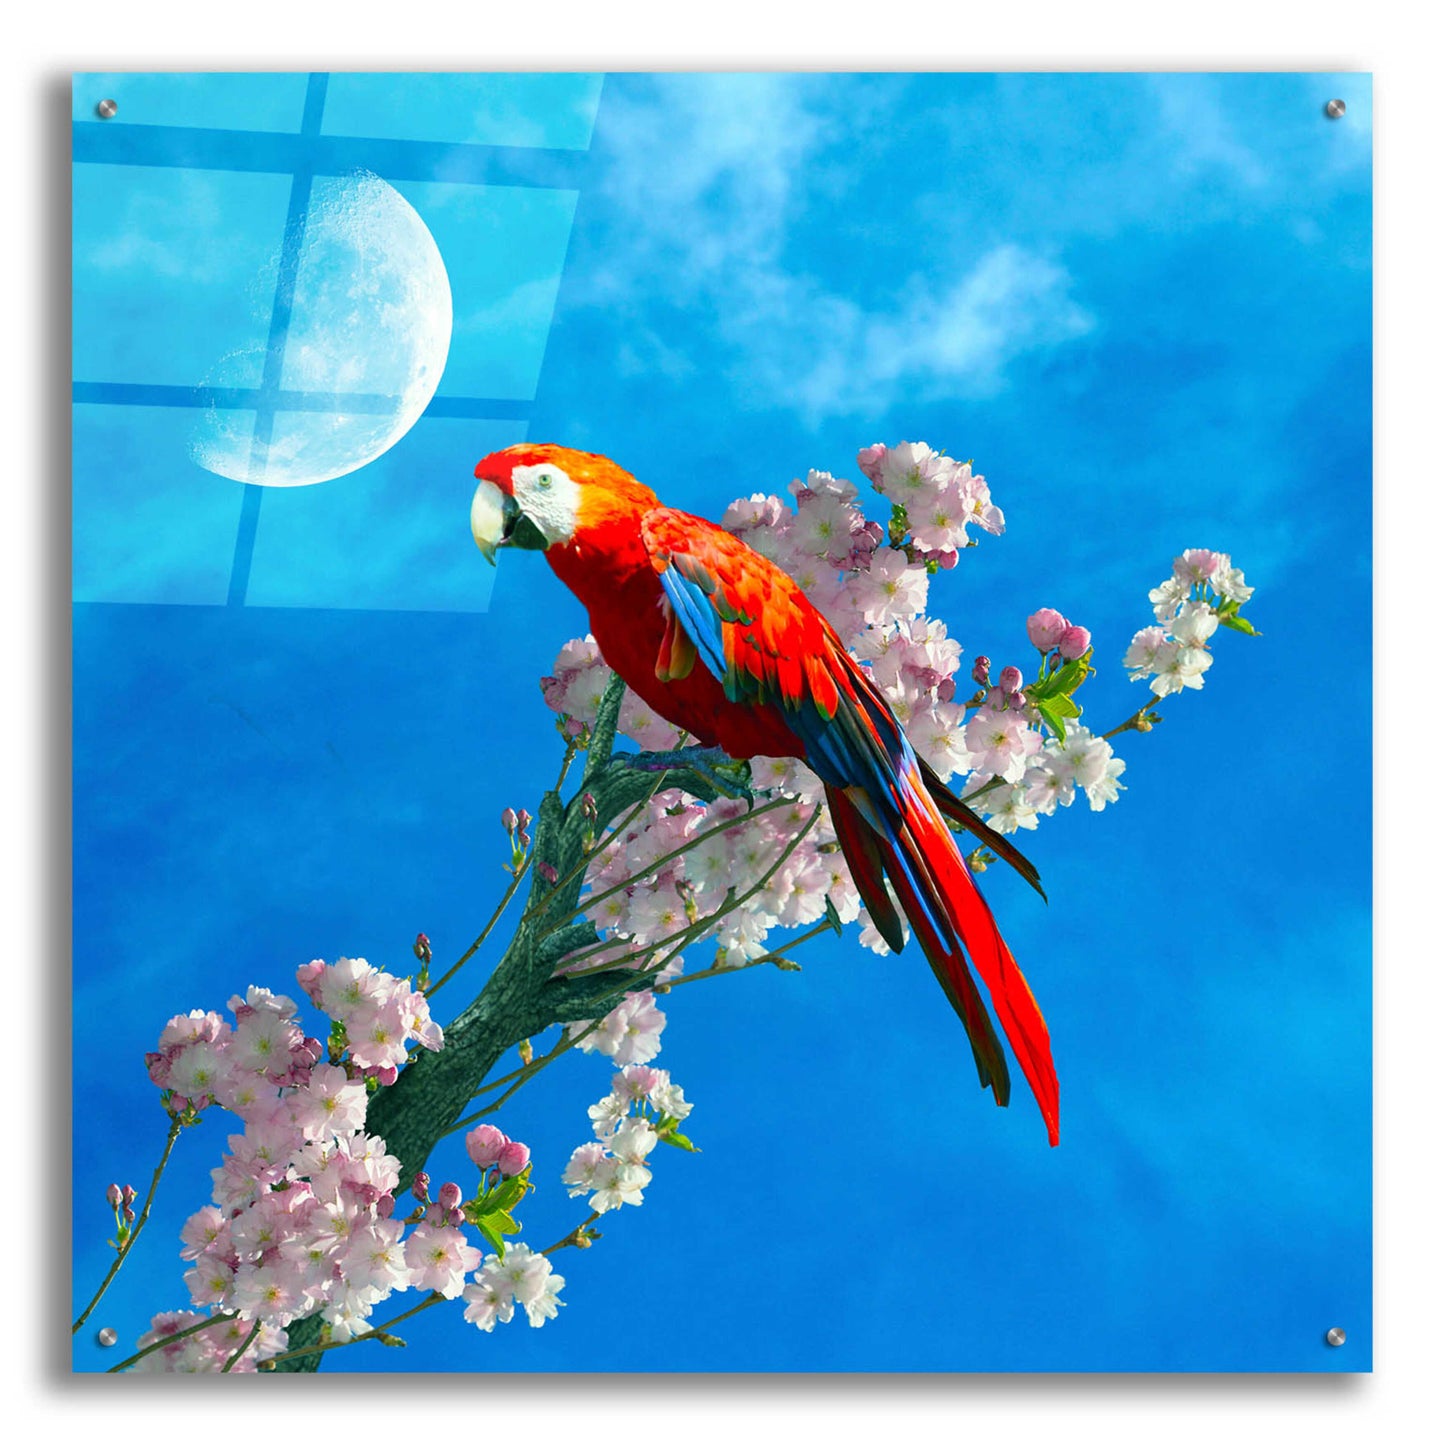 Epic Art 'Red Parrot' by Ata Alishahi, Acrylic Glass Wall Art,36x36